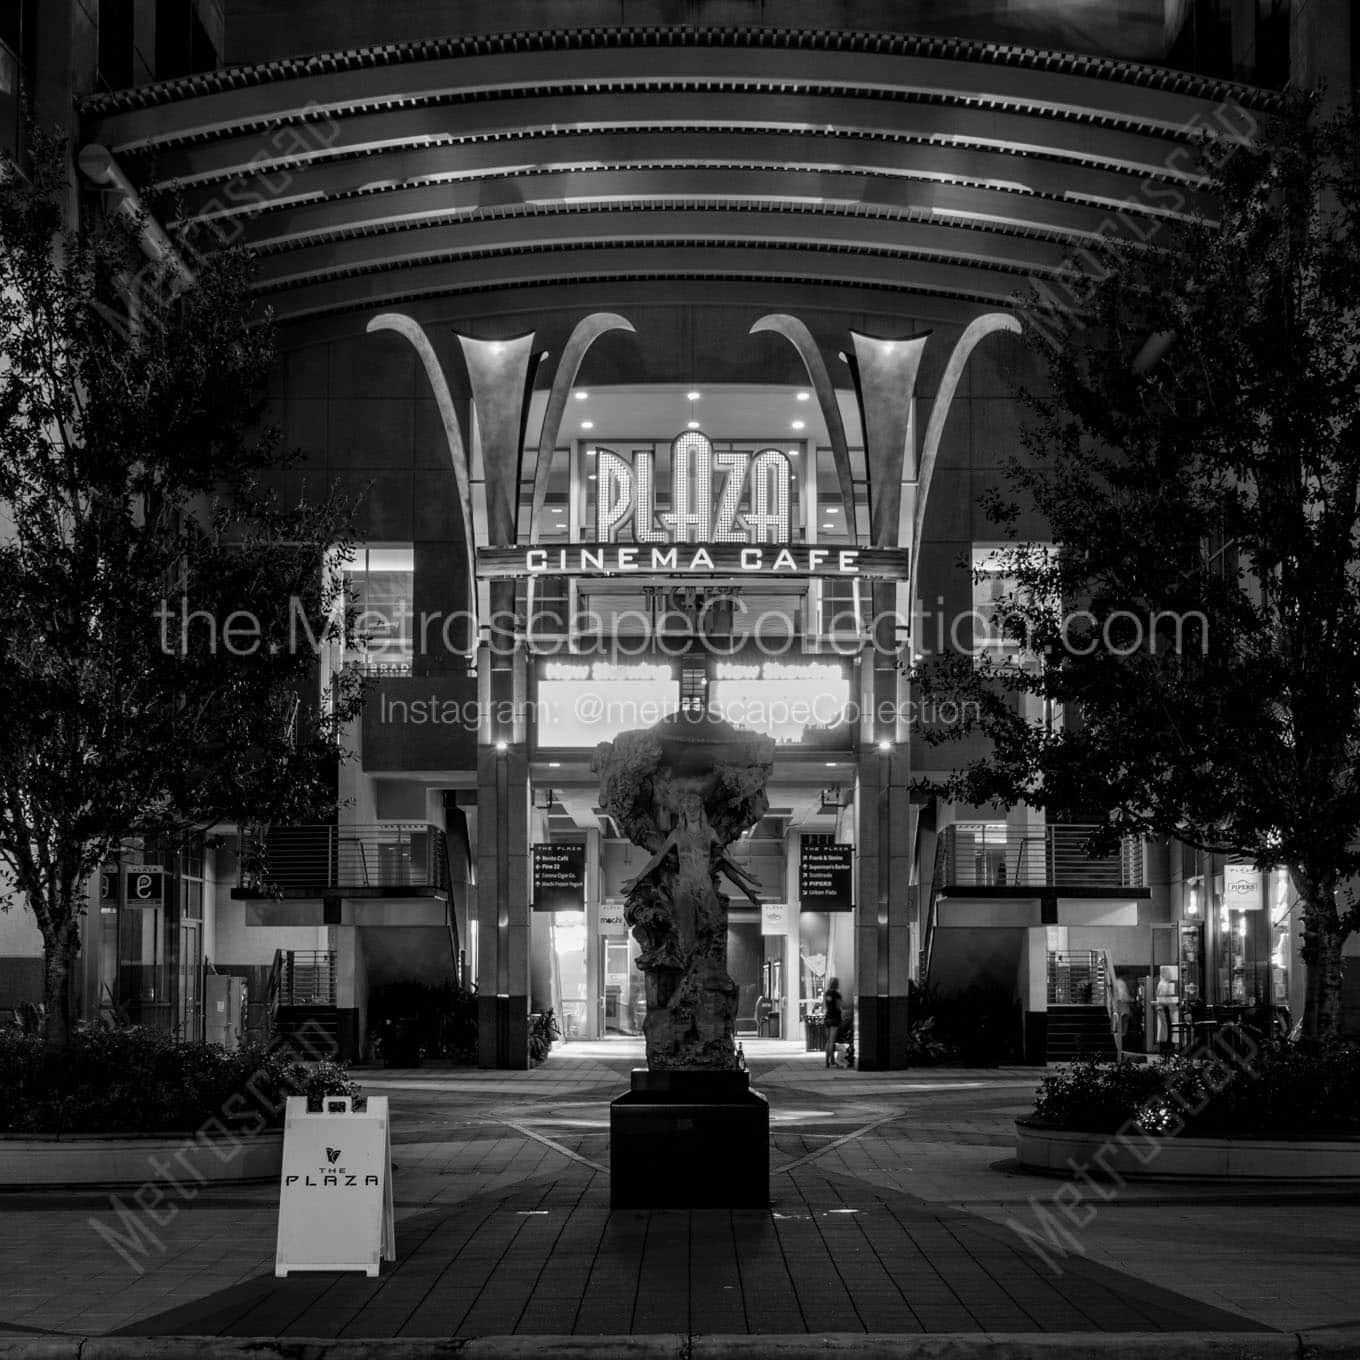 plaza cinema cafe at night Black & White Office Art